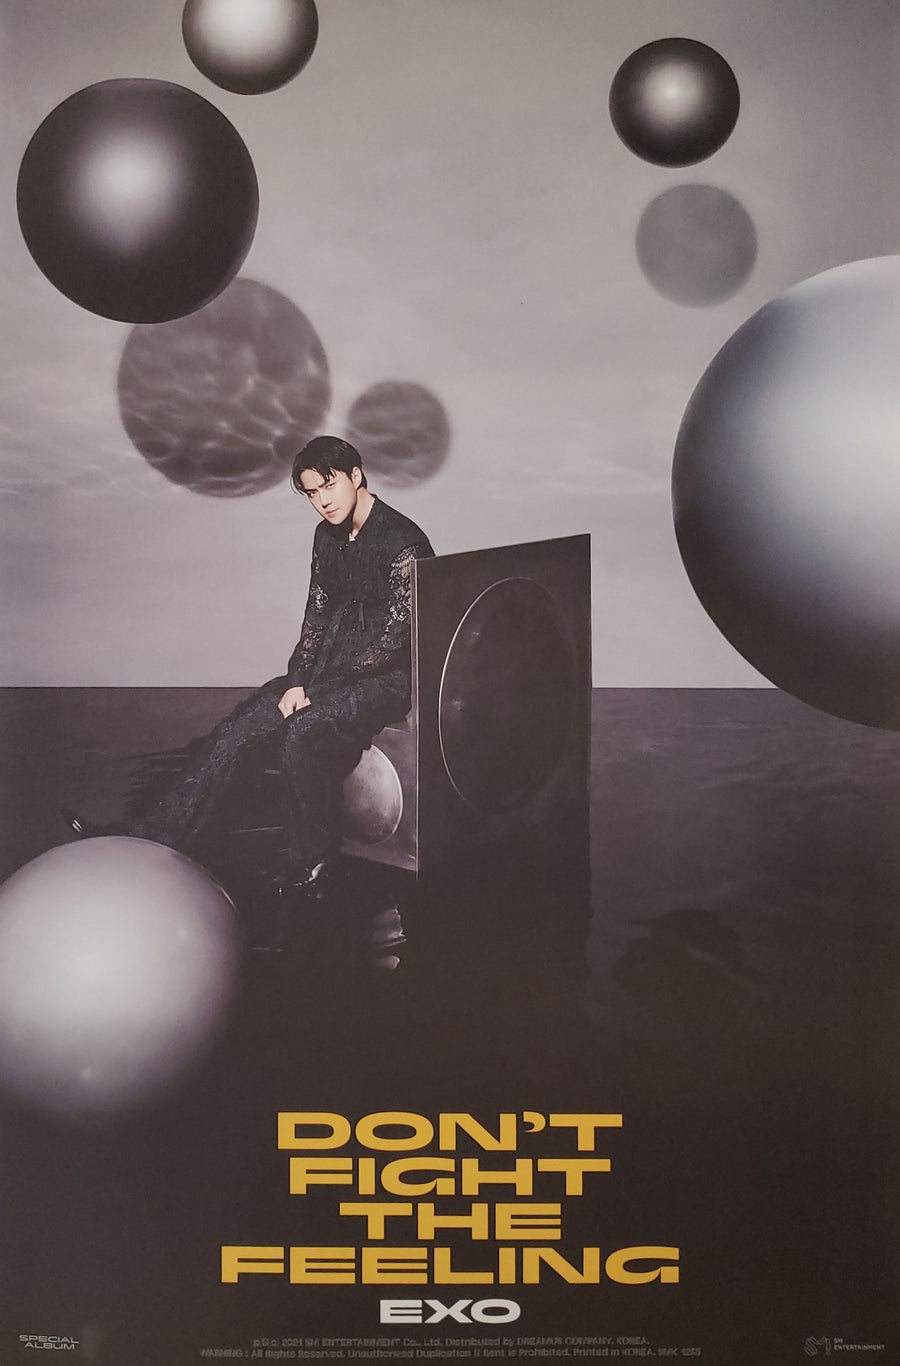 EXO SPECIAL ALBUM DON'T FIGHT THE FEELING (PHOTOBOOK VER 1) Official Poster - Sehun Version